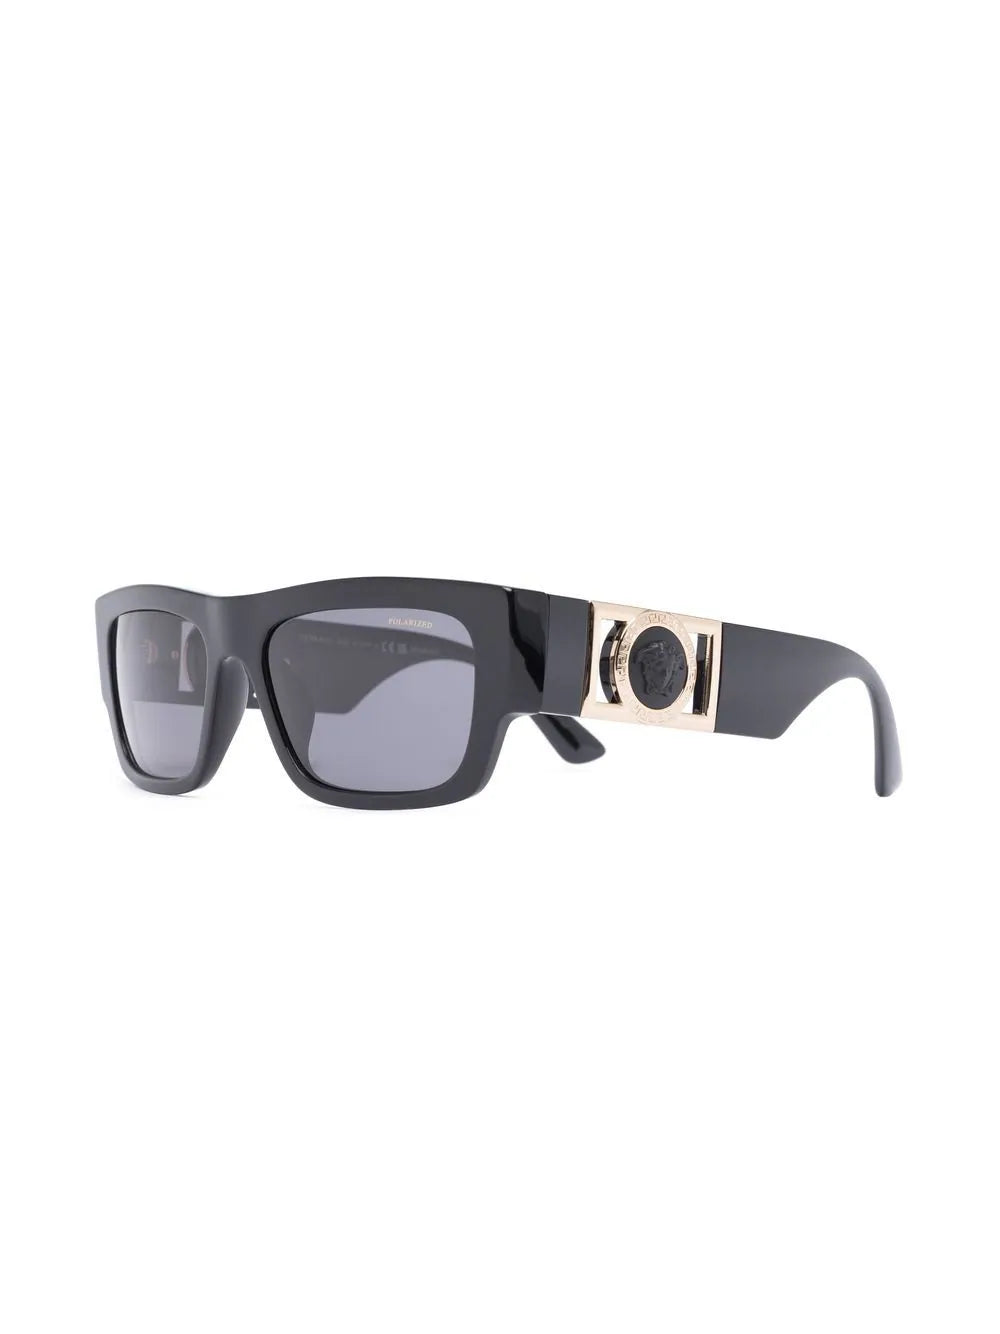 Versace Women's Butterfly Sunglasses, Dark Gray/Black 